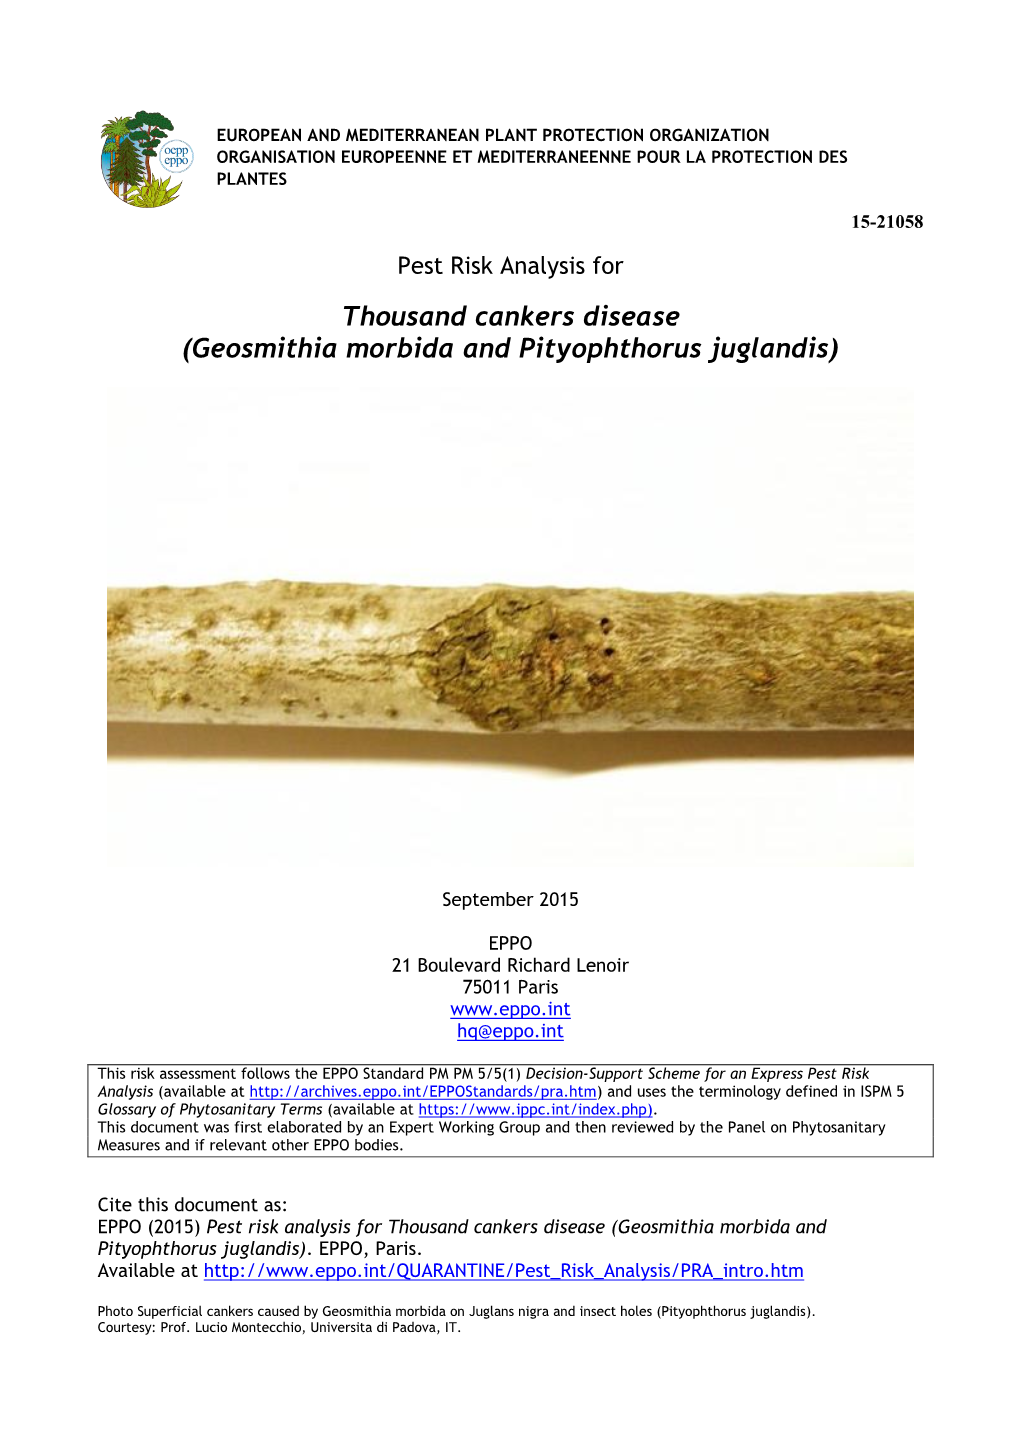 Pest Risk Analysis for Thousand Cankers Disease (Geosmithia Morbida and Pityophthorus Juglandis)